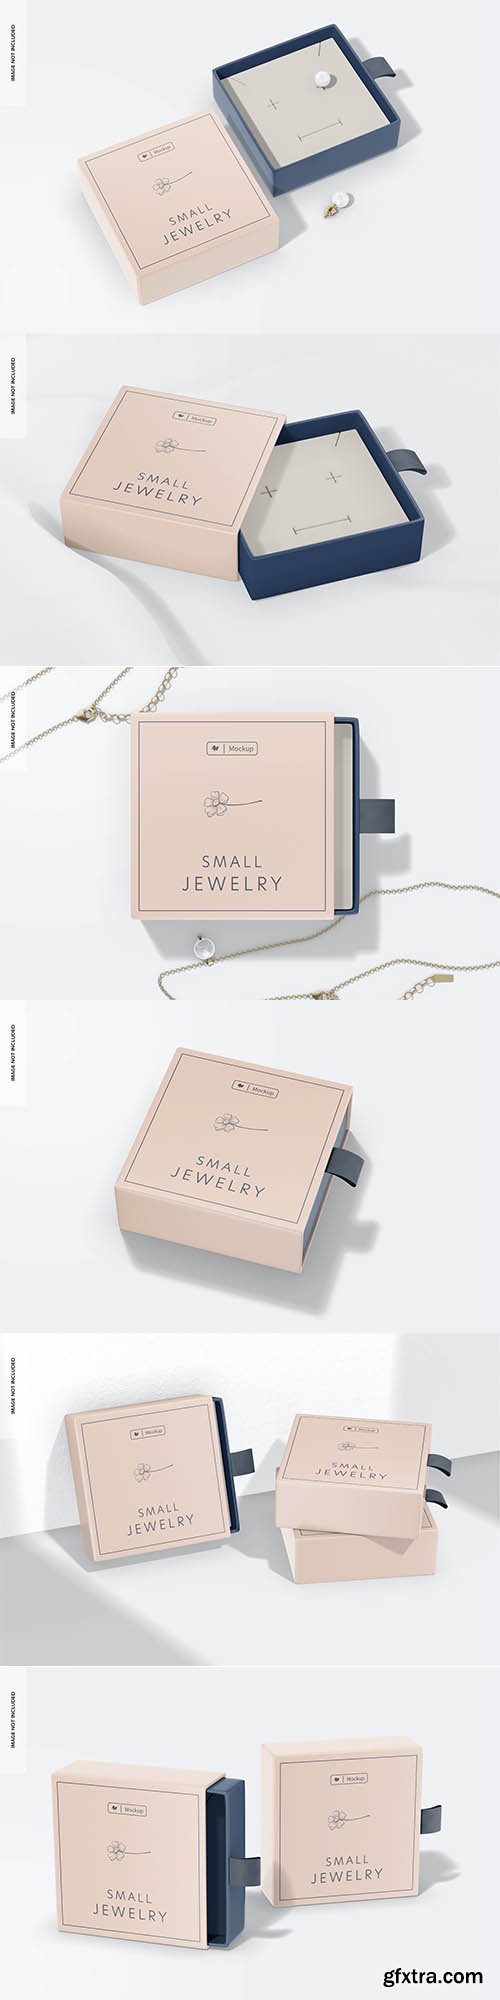 Small jewelry paper box mockup